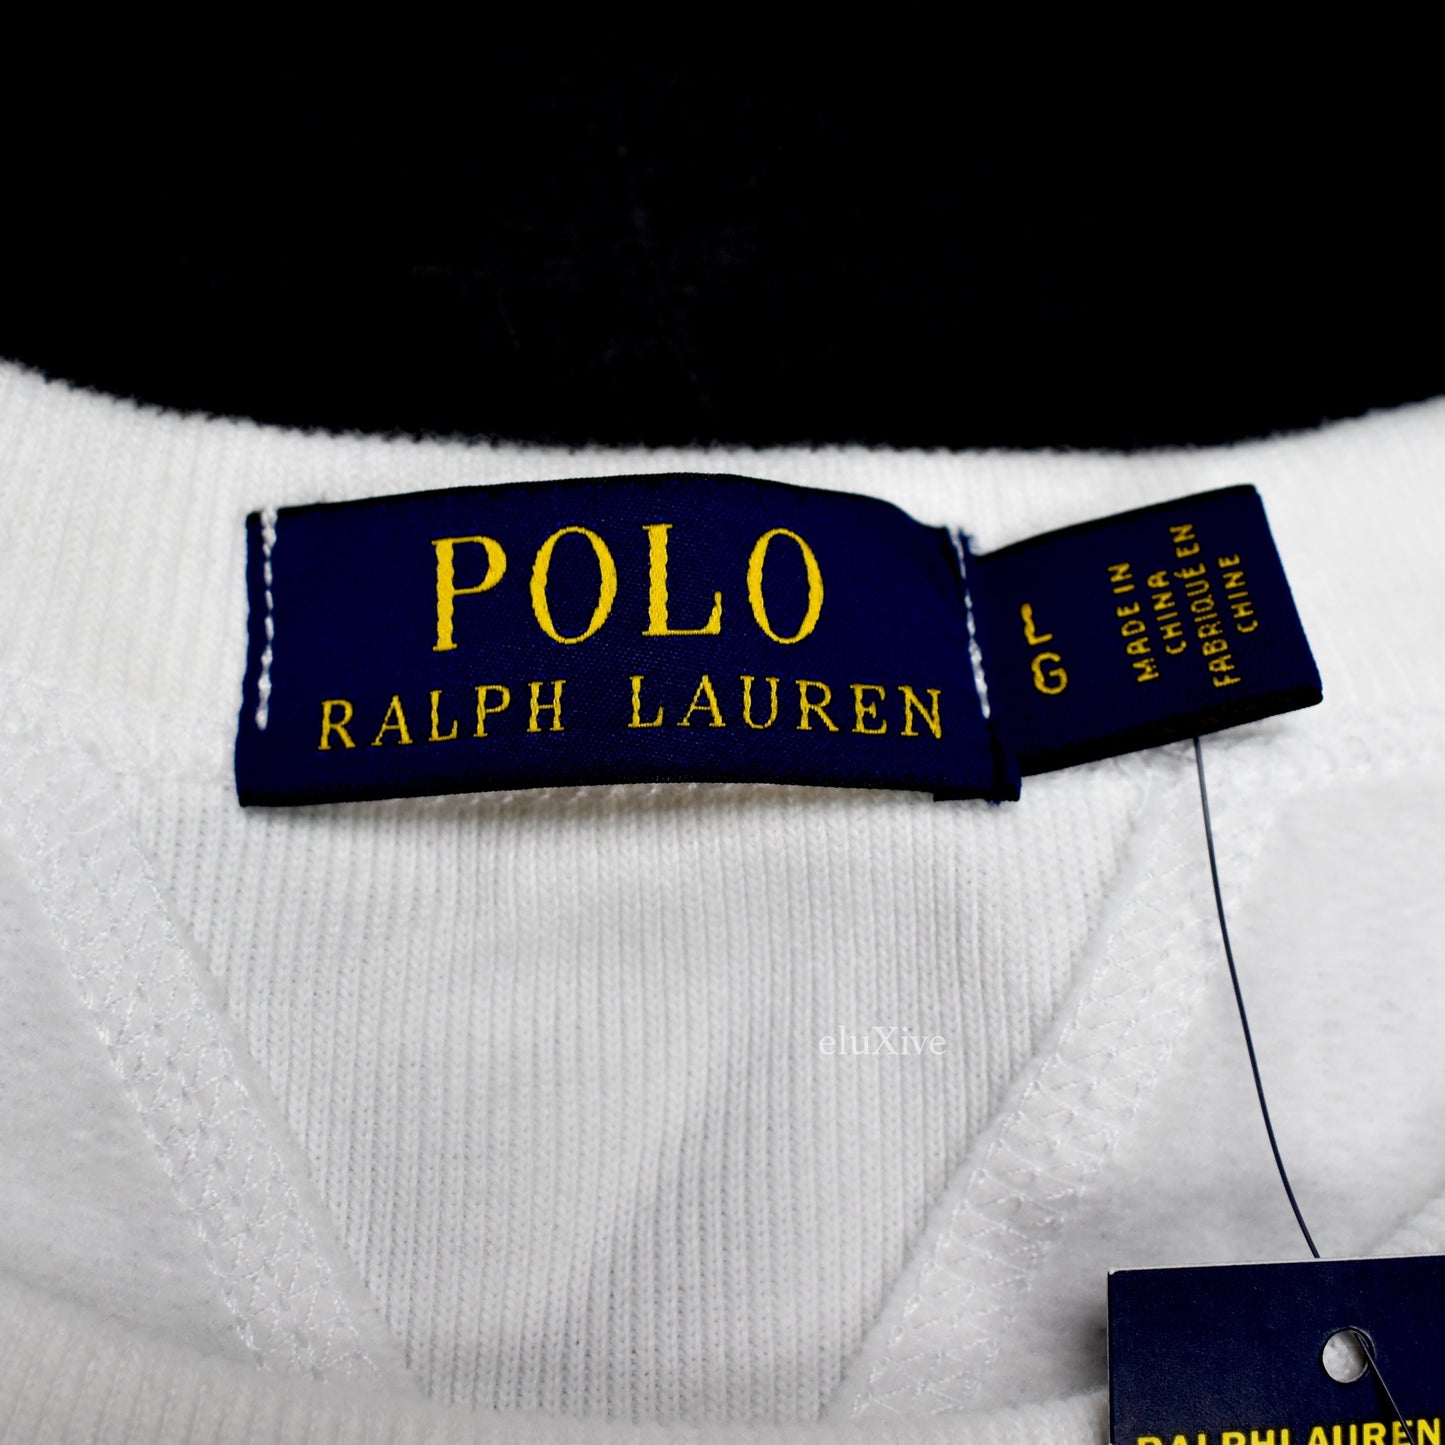 Polo Ralph Lauren - Snow Beach Monochrome Bear Sweatshirt